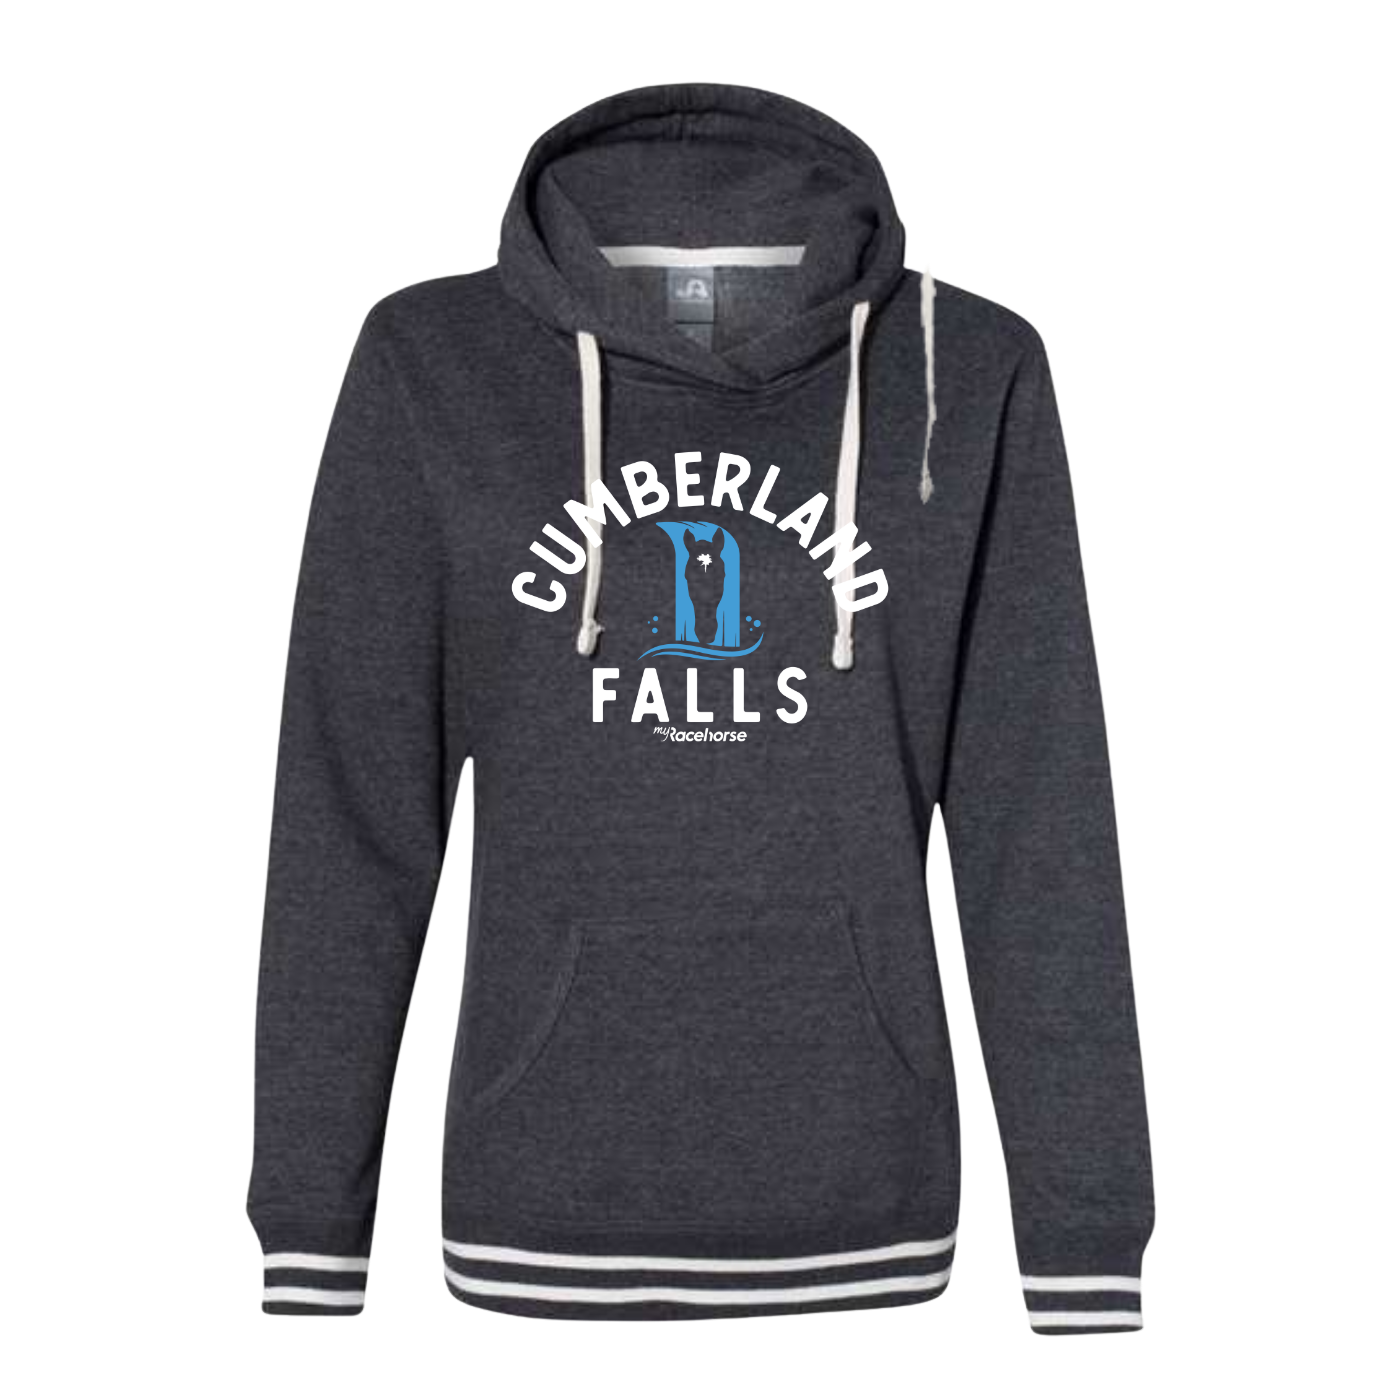 Cumberland Falls Women's Hooded Sweatshirt